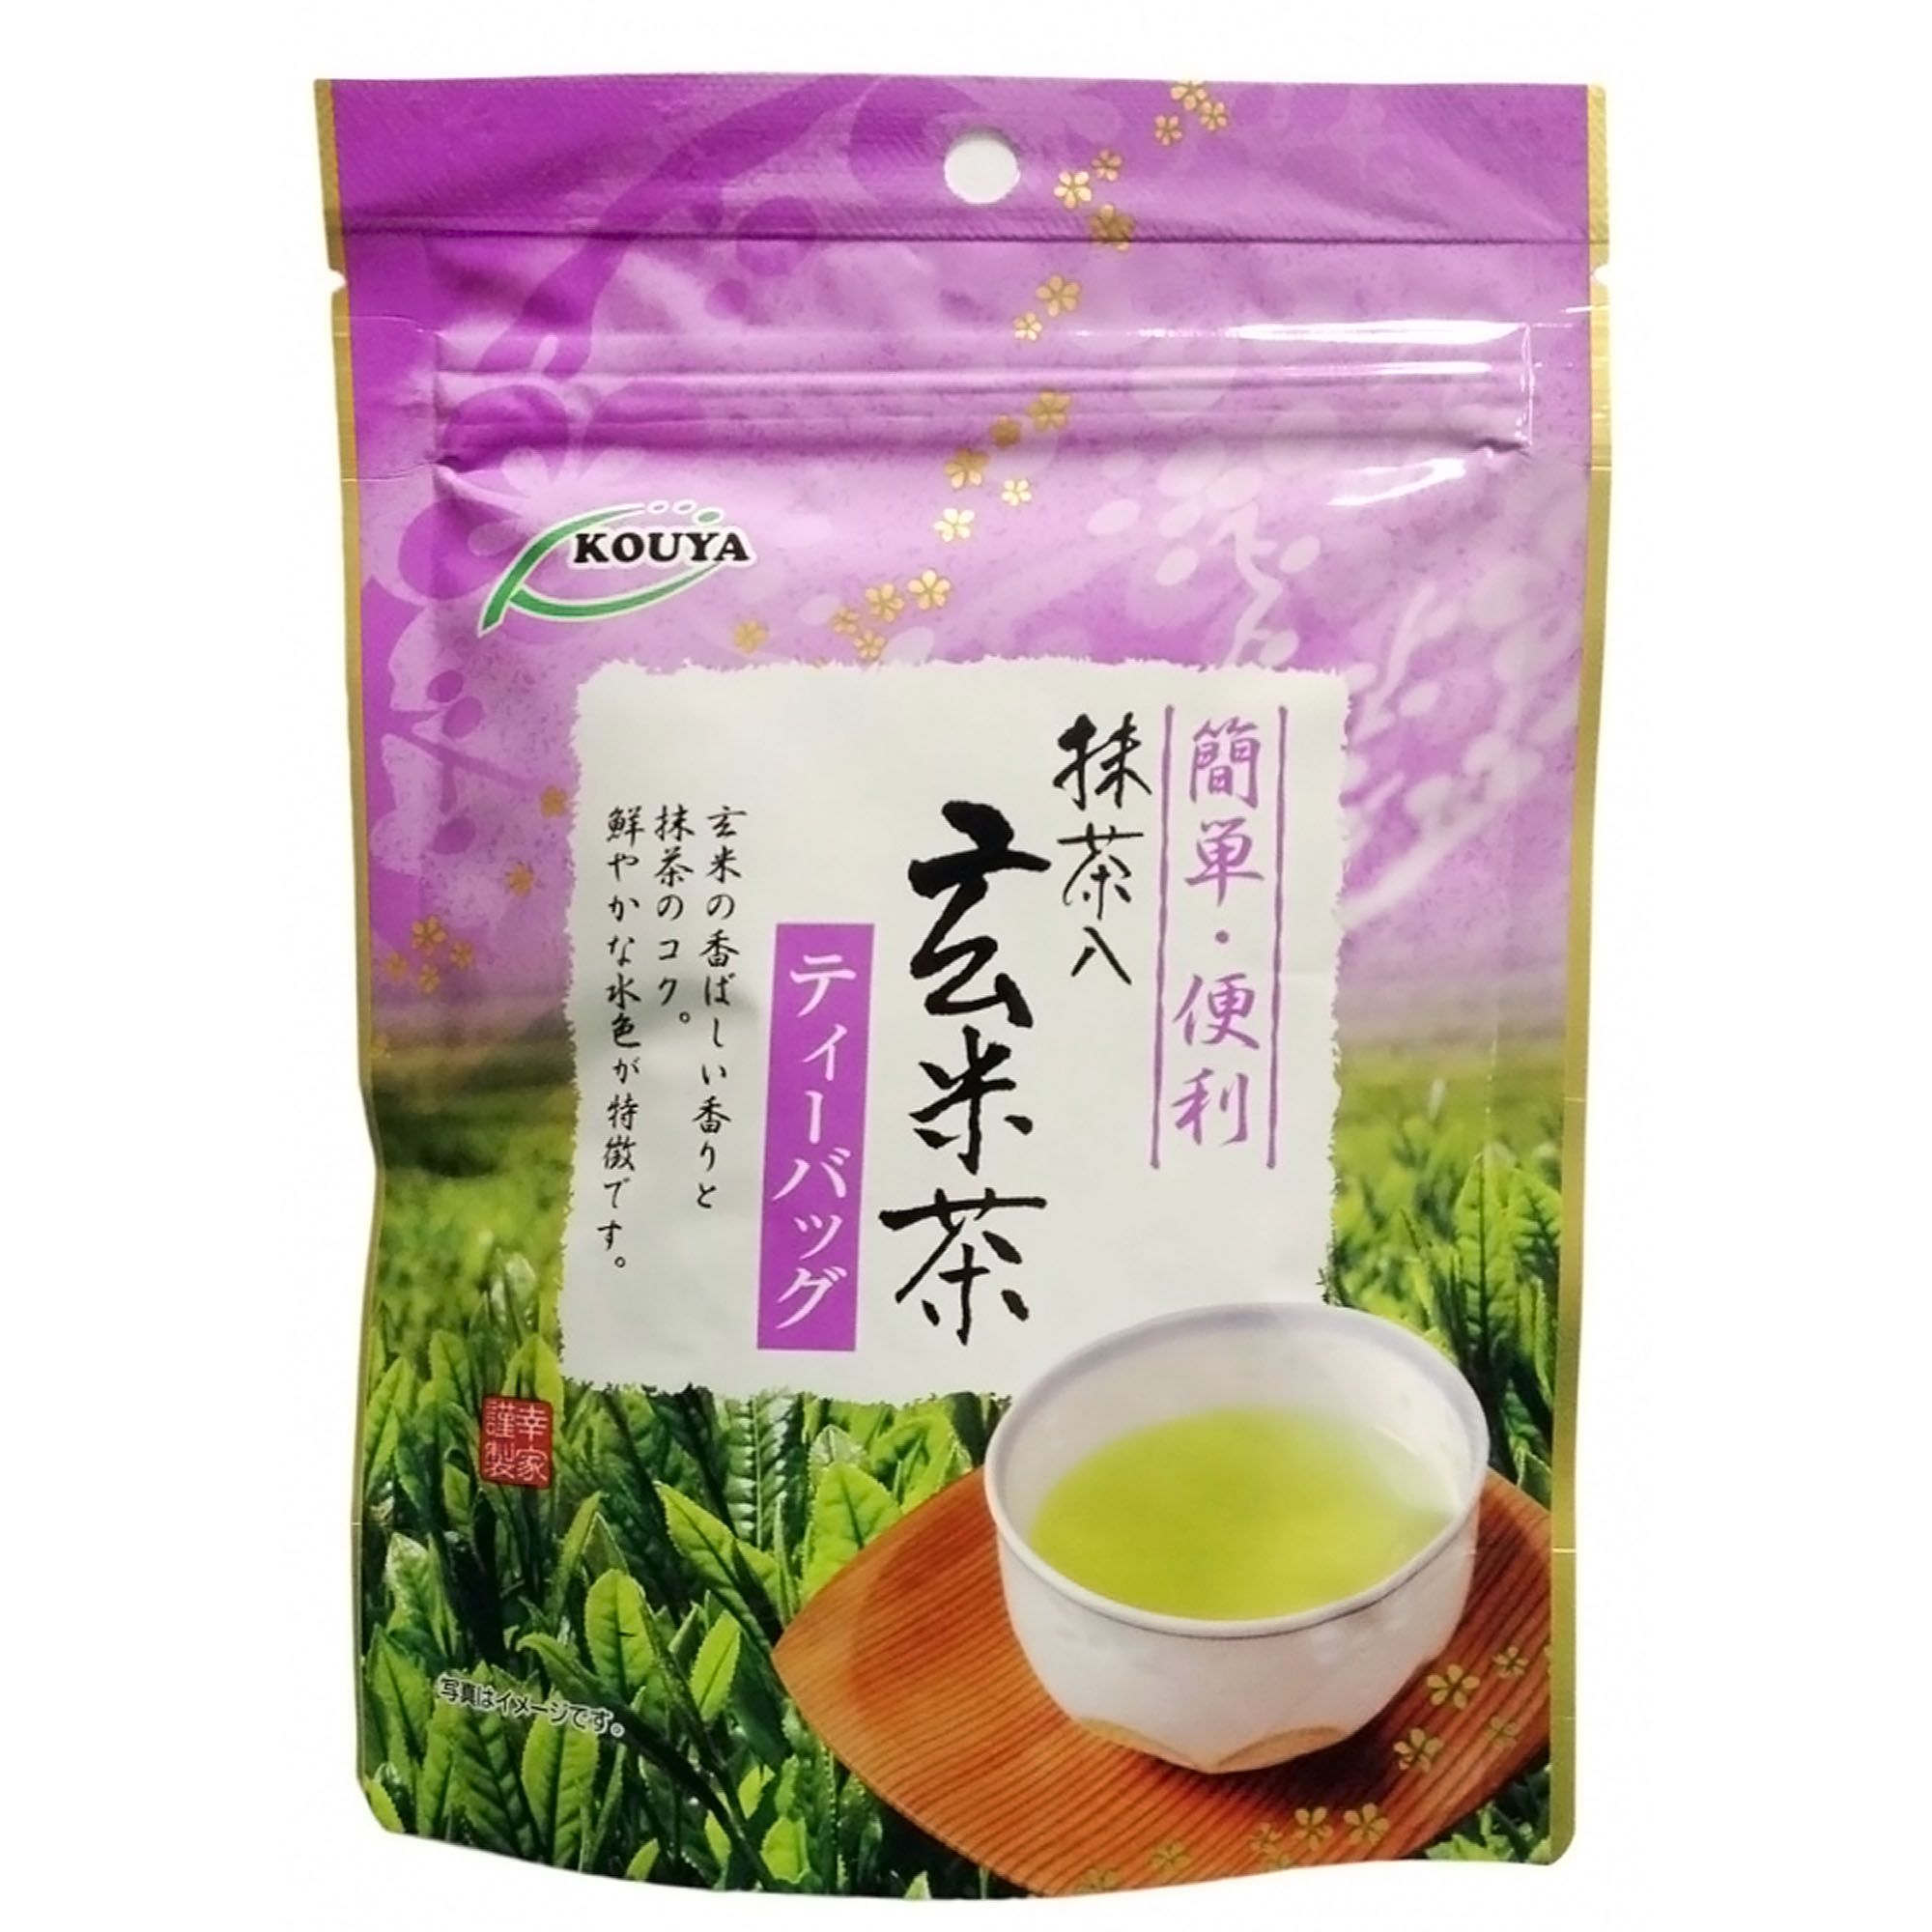 Японский чай Kouya Геммай-ча (15 шт), 30 г чай 101 чай японский зеленый матча токусен 40 г